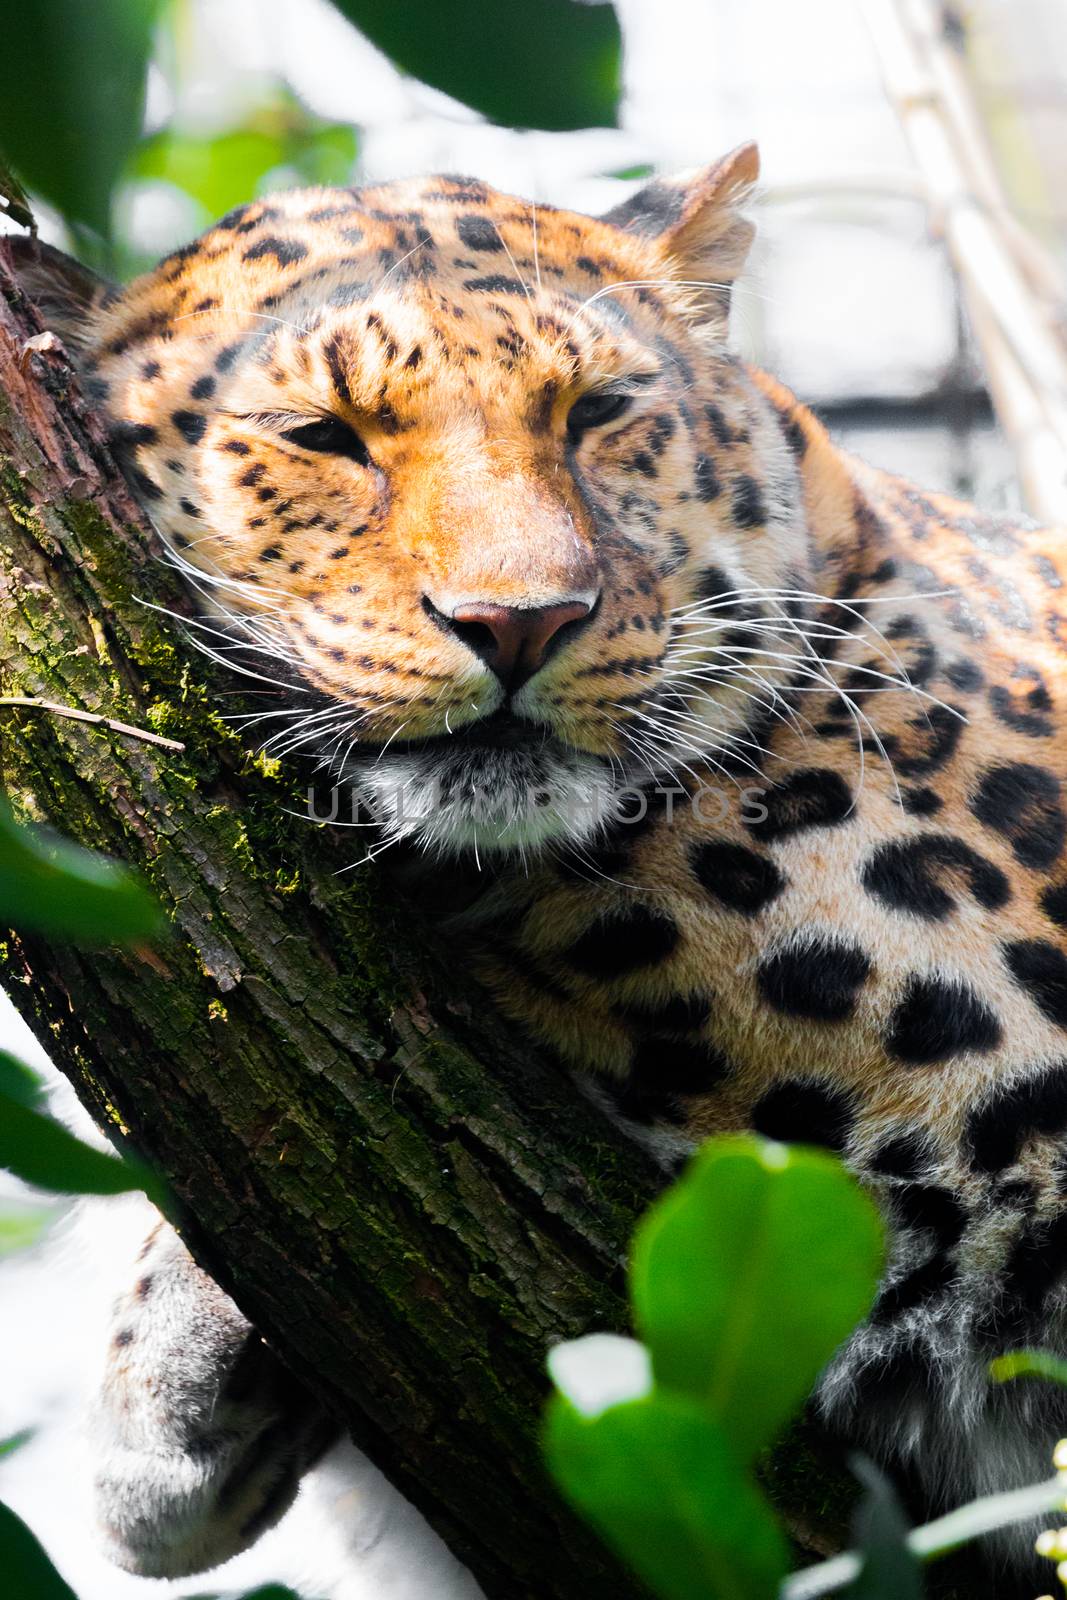 Sleeping leopard on a tree - wildlife concept